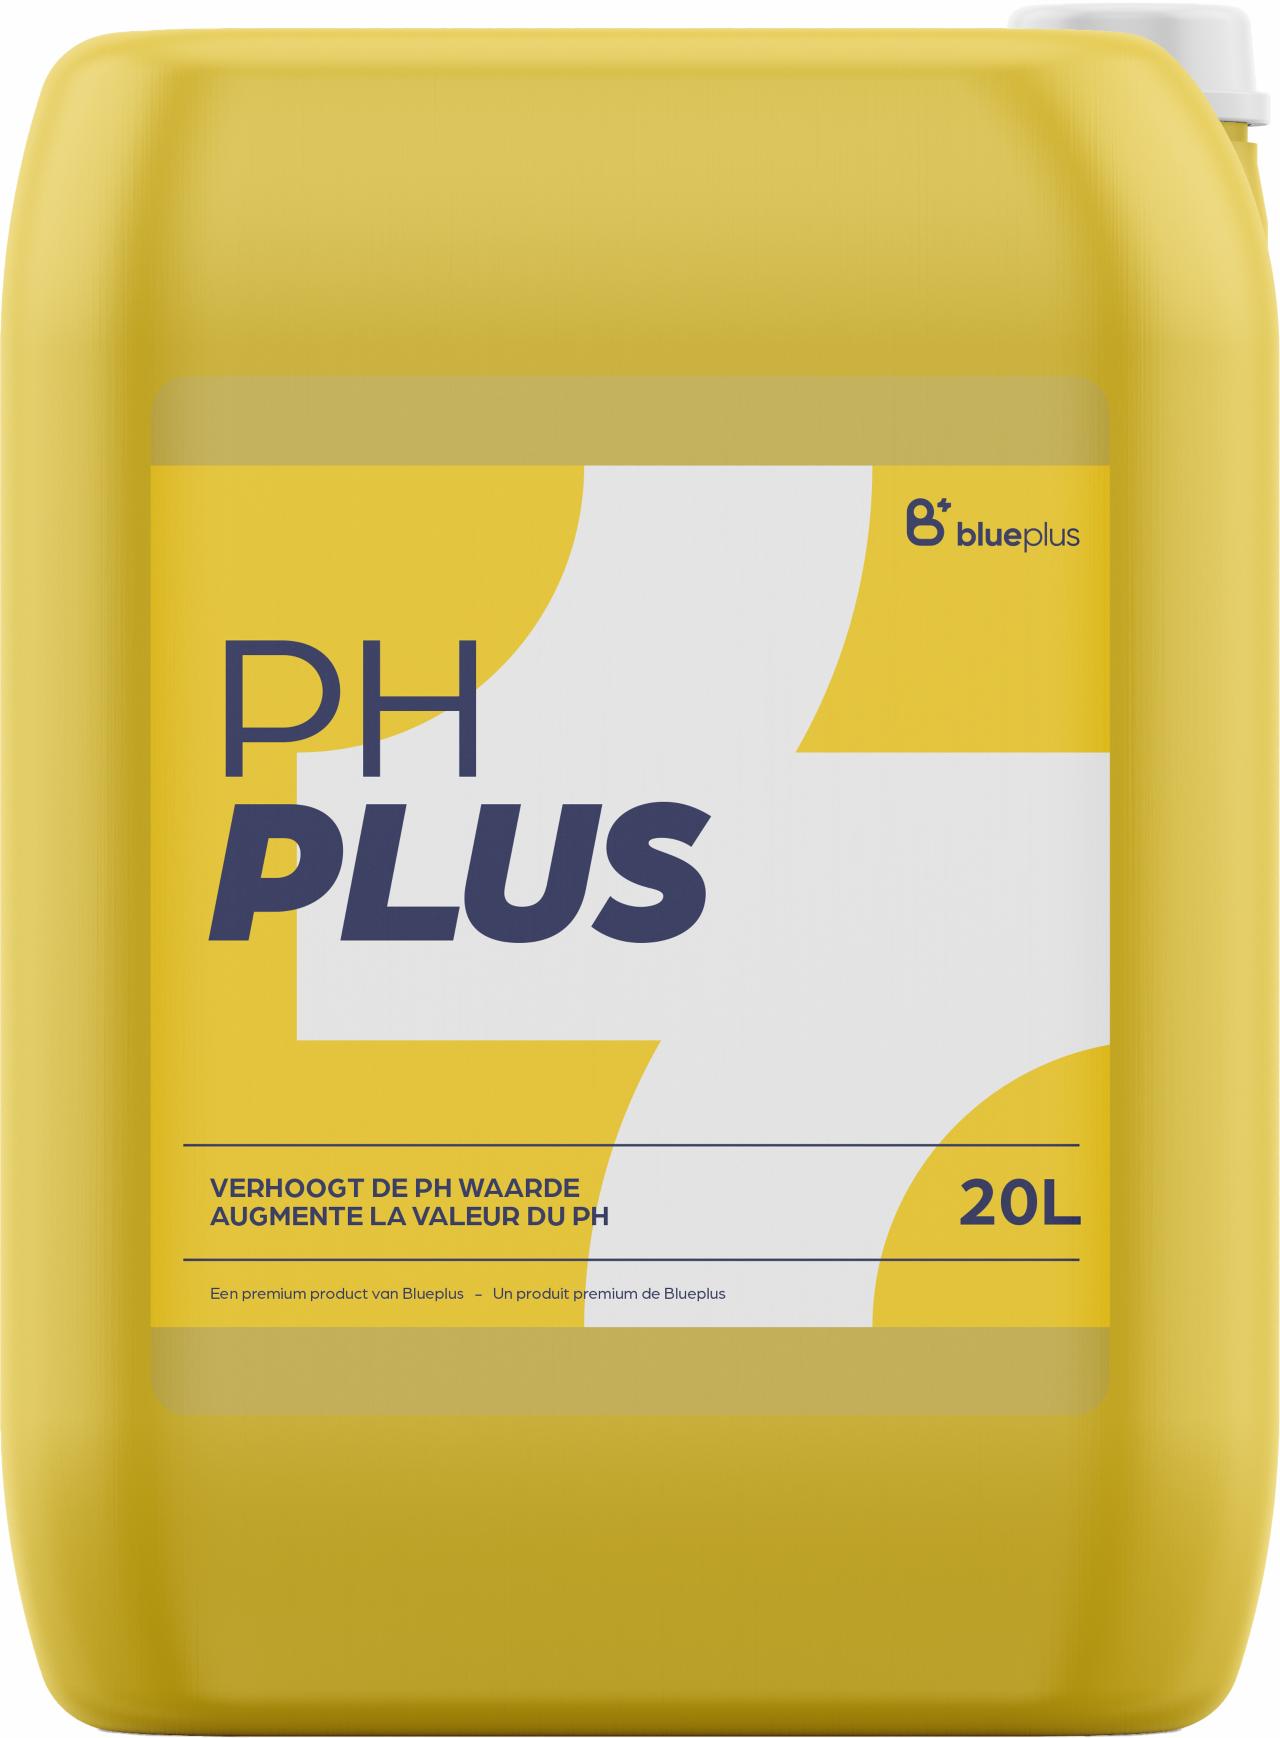 blueplus ph+ 29% 20l reusable can